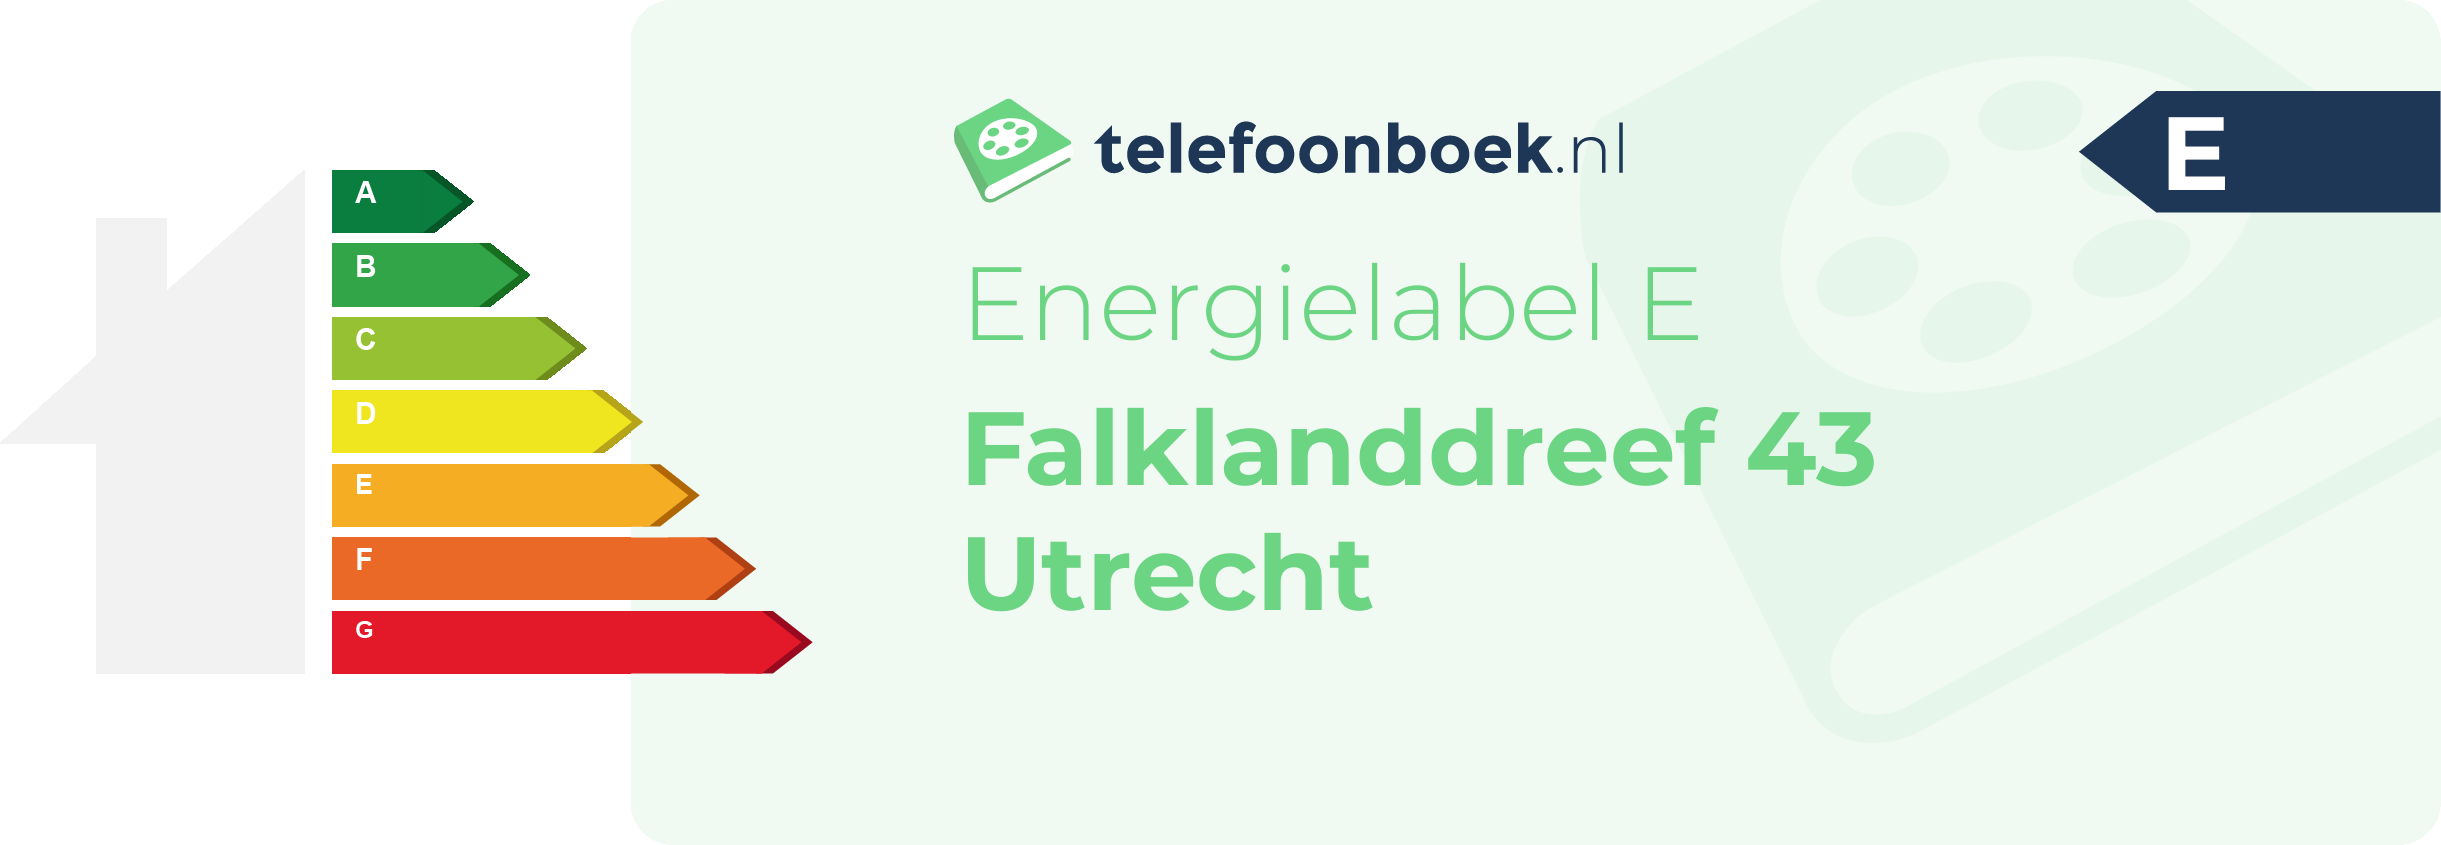 Energielabel Falklanddreef 43 Utrecht